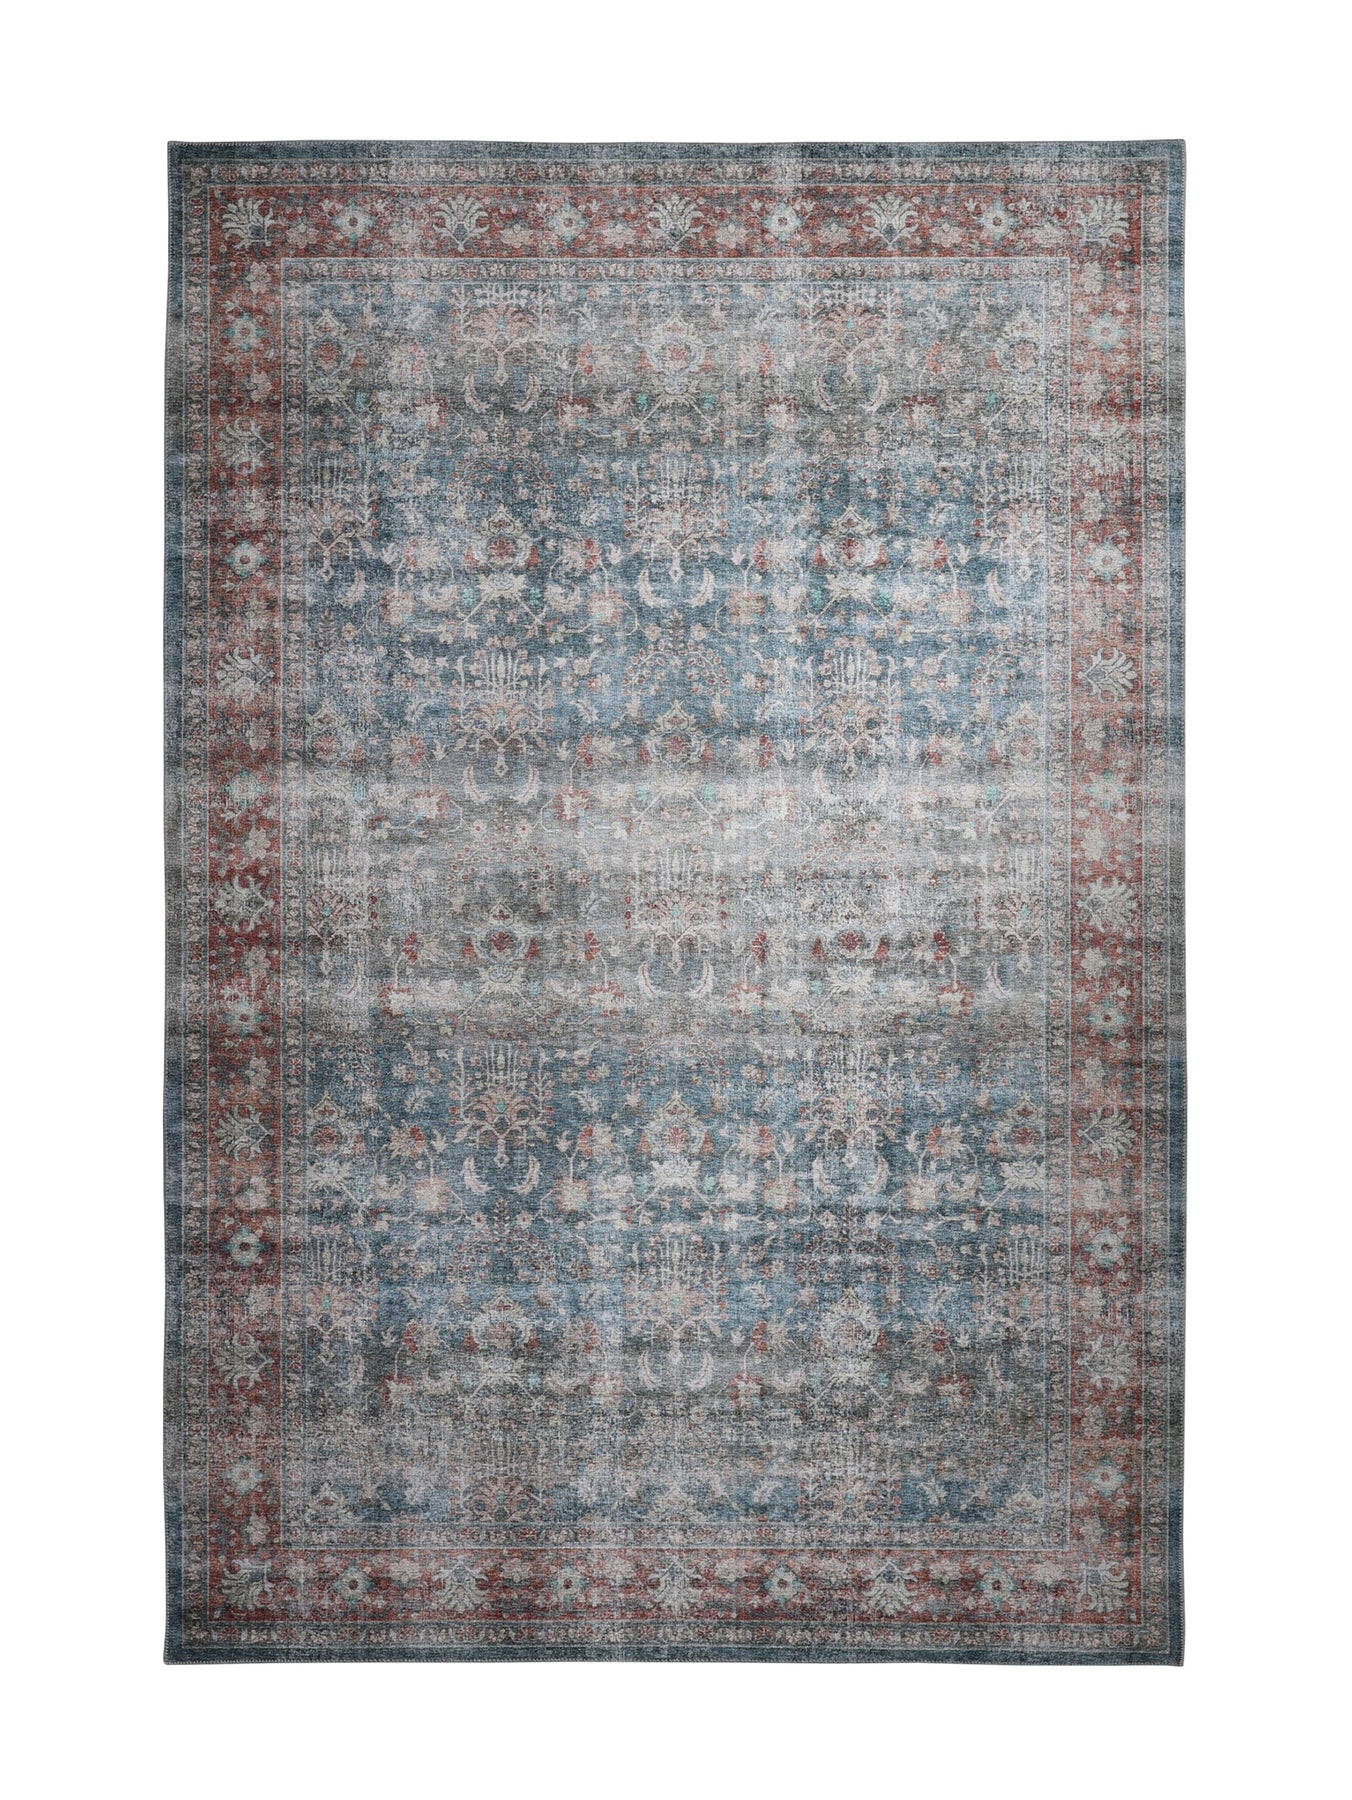 sophia rug in jewel